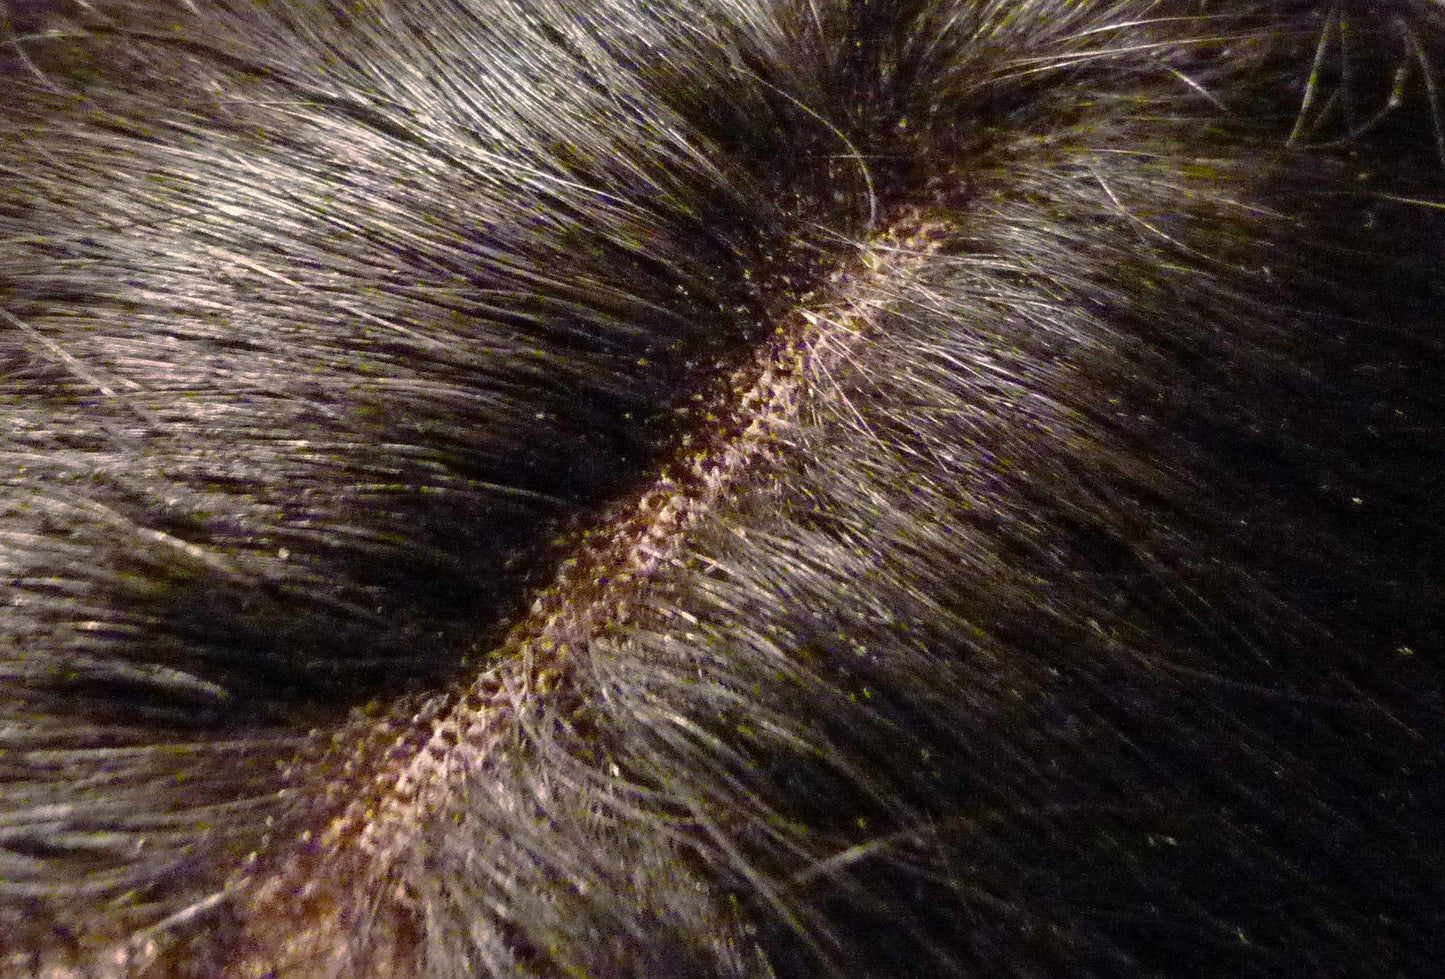 Indischer Virgin-Remy-Spitzenverschluss – 10,2 x 10,2 cm – Virgin Hair & Beauty, die besten Haarverlängerungen, echtes Virgin-Menschenhaar.